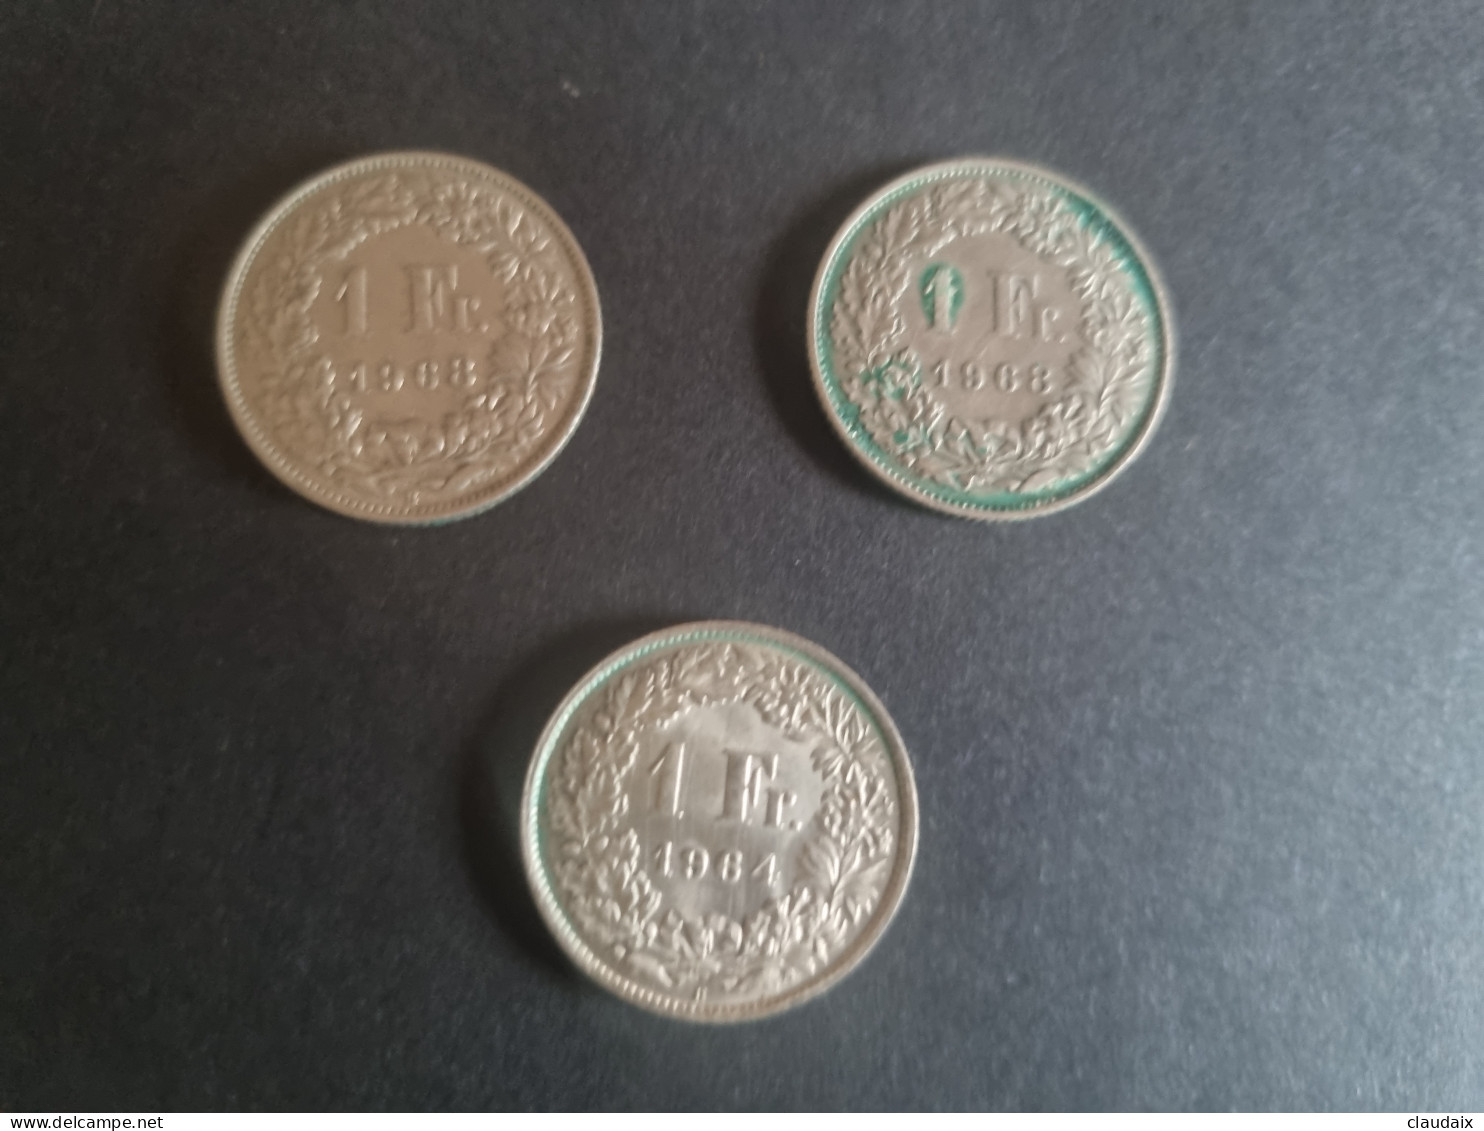 Lot francs suisses